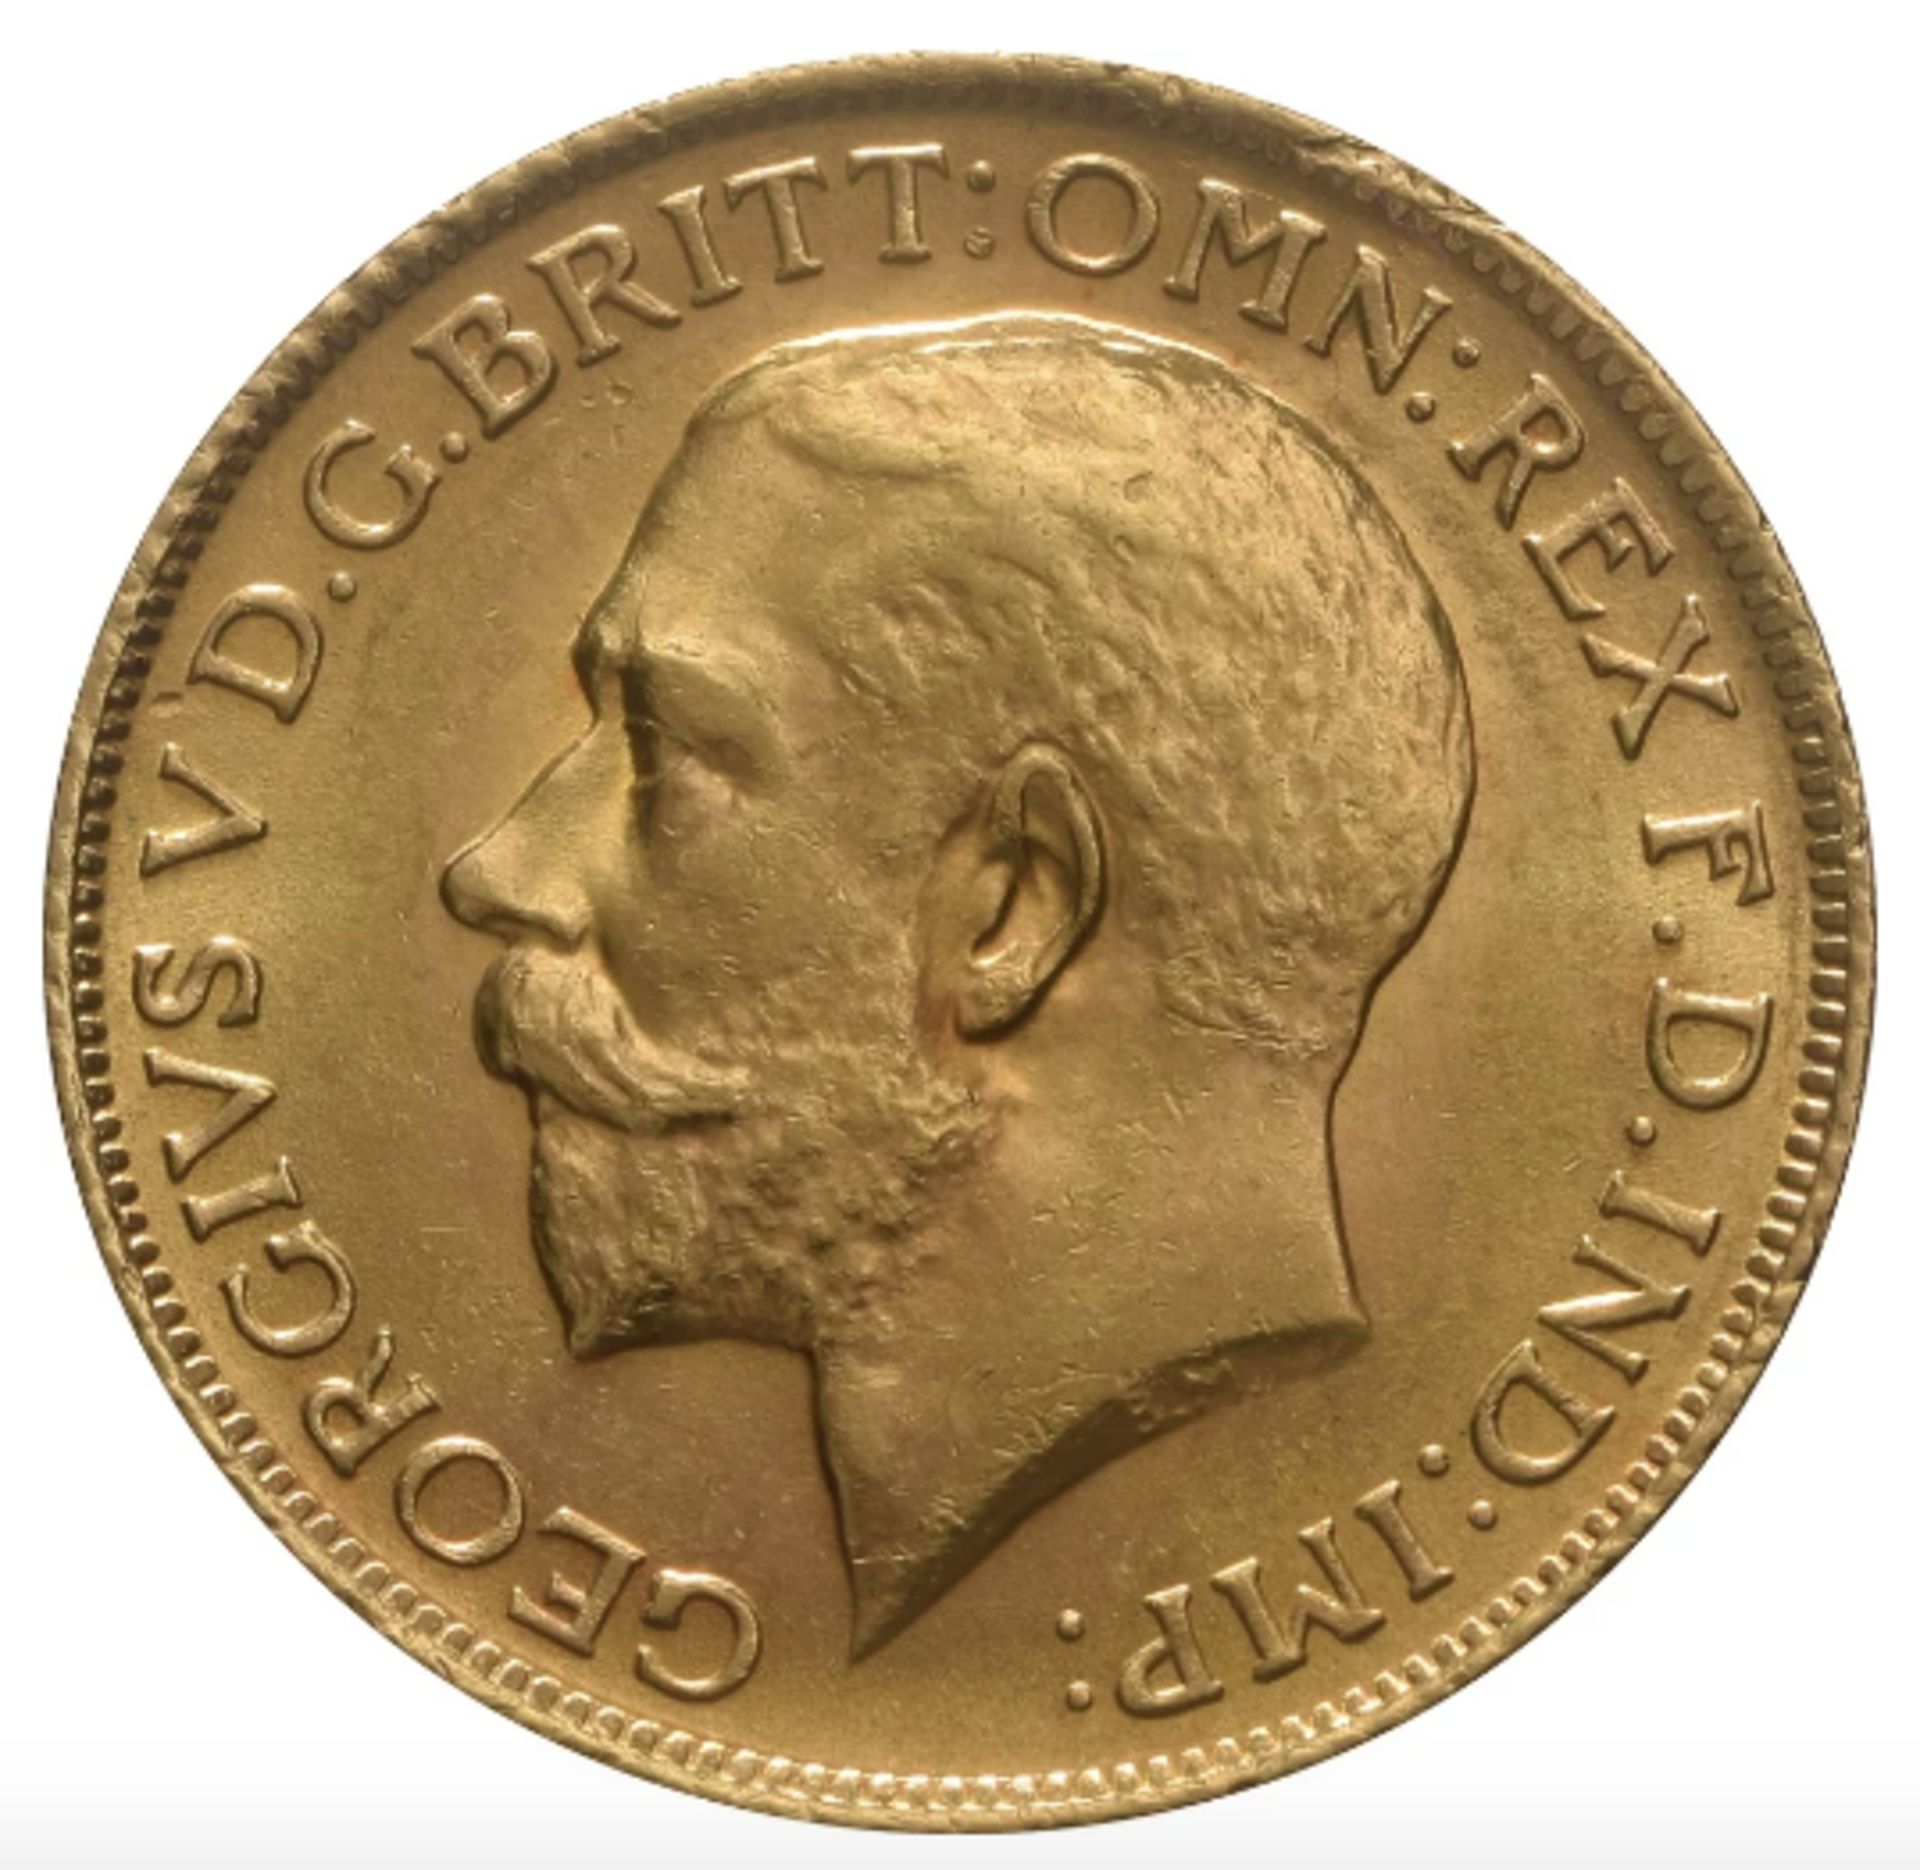 1914 - Full Gold Sovereign - King George V - London - Image 2 of 2